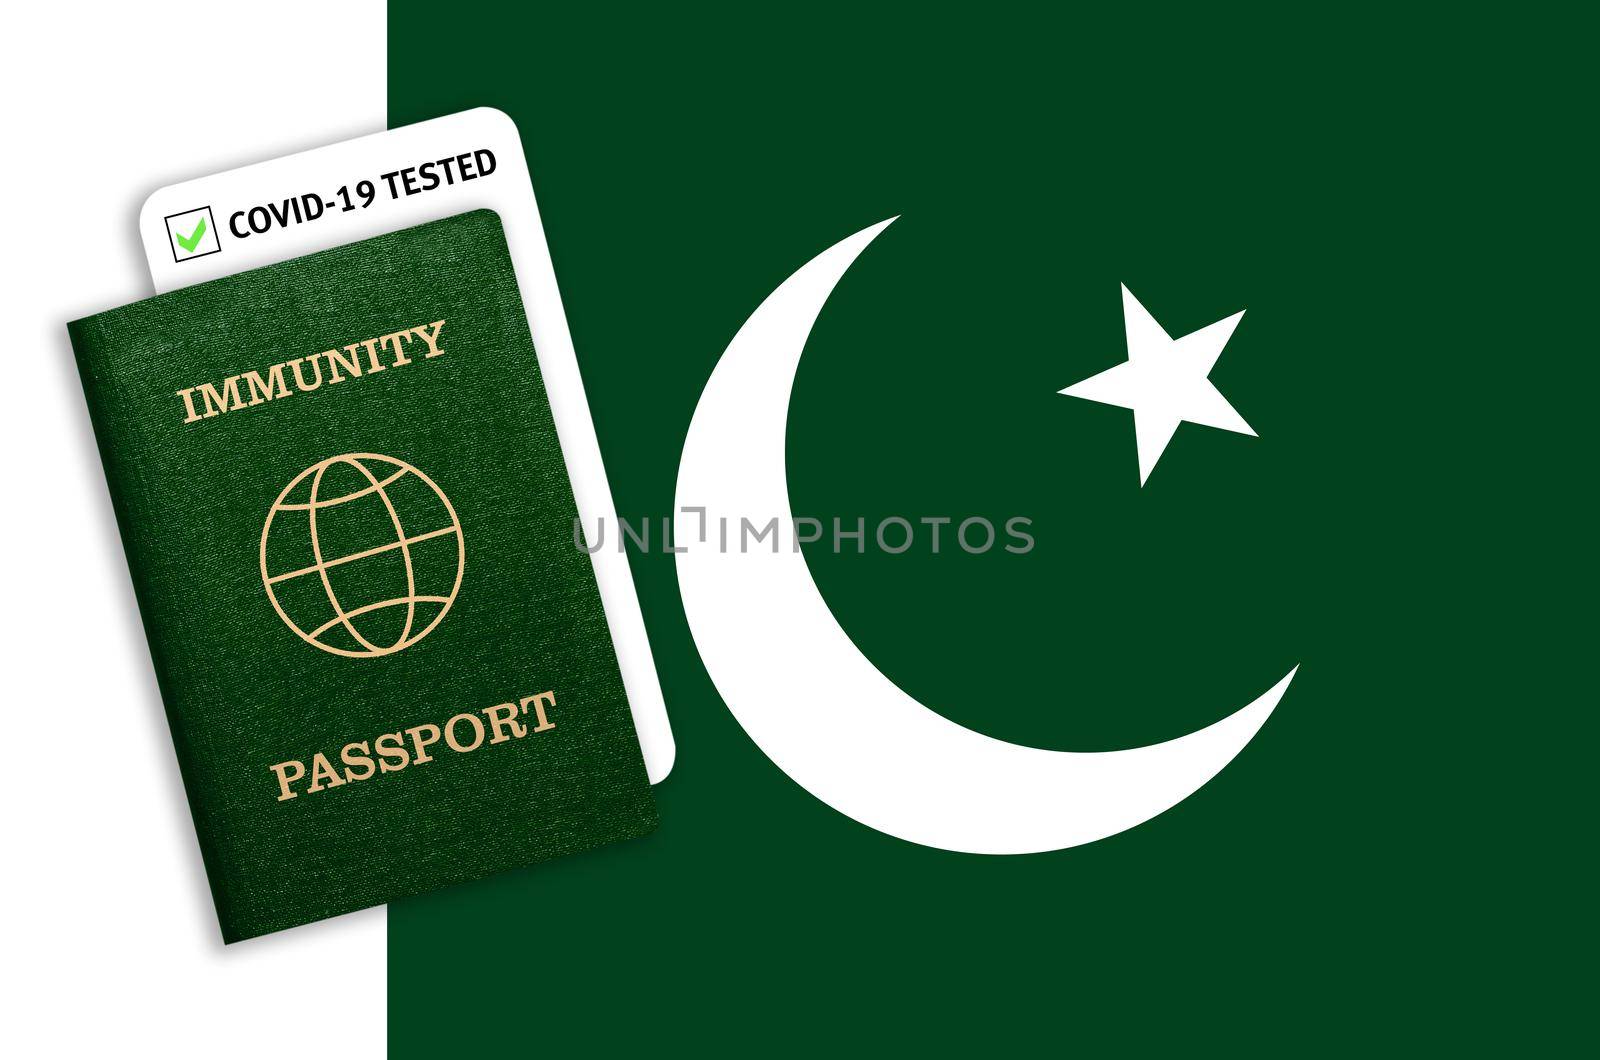 Immunity passport and test result for COVID-19 on flag of Pakistan. by galinasharapova